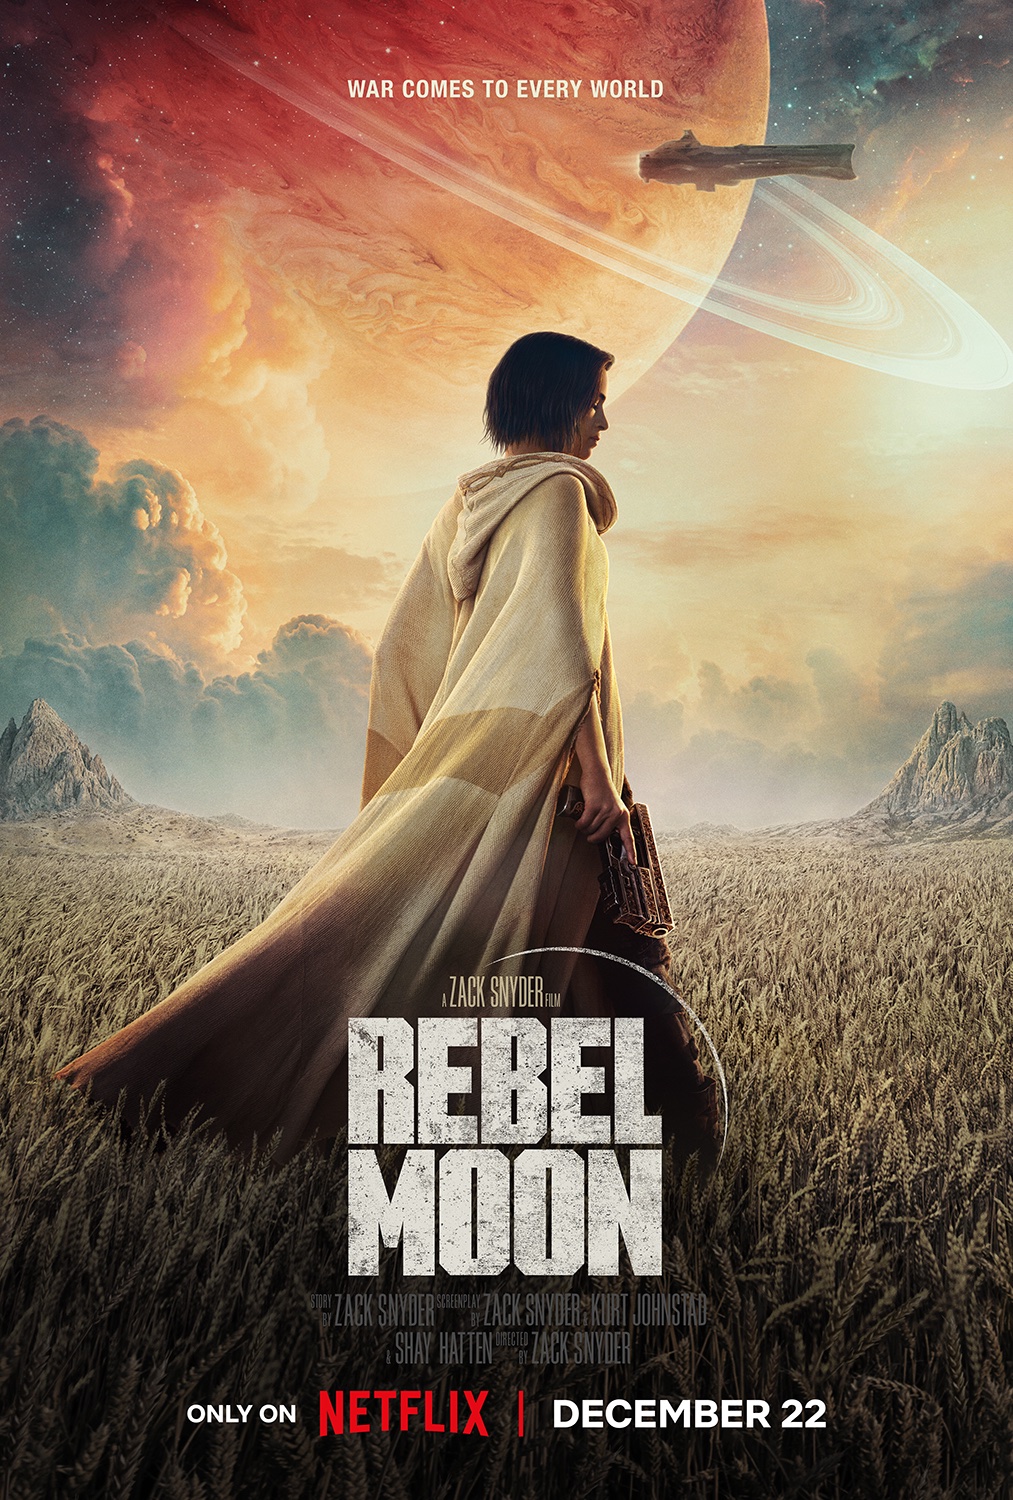 Rebel Moon [Zack Snyder]